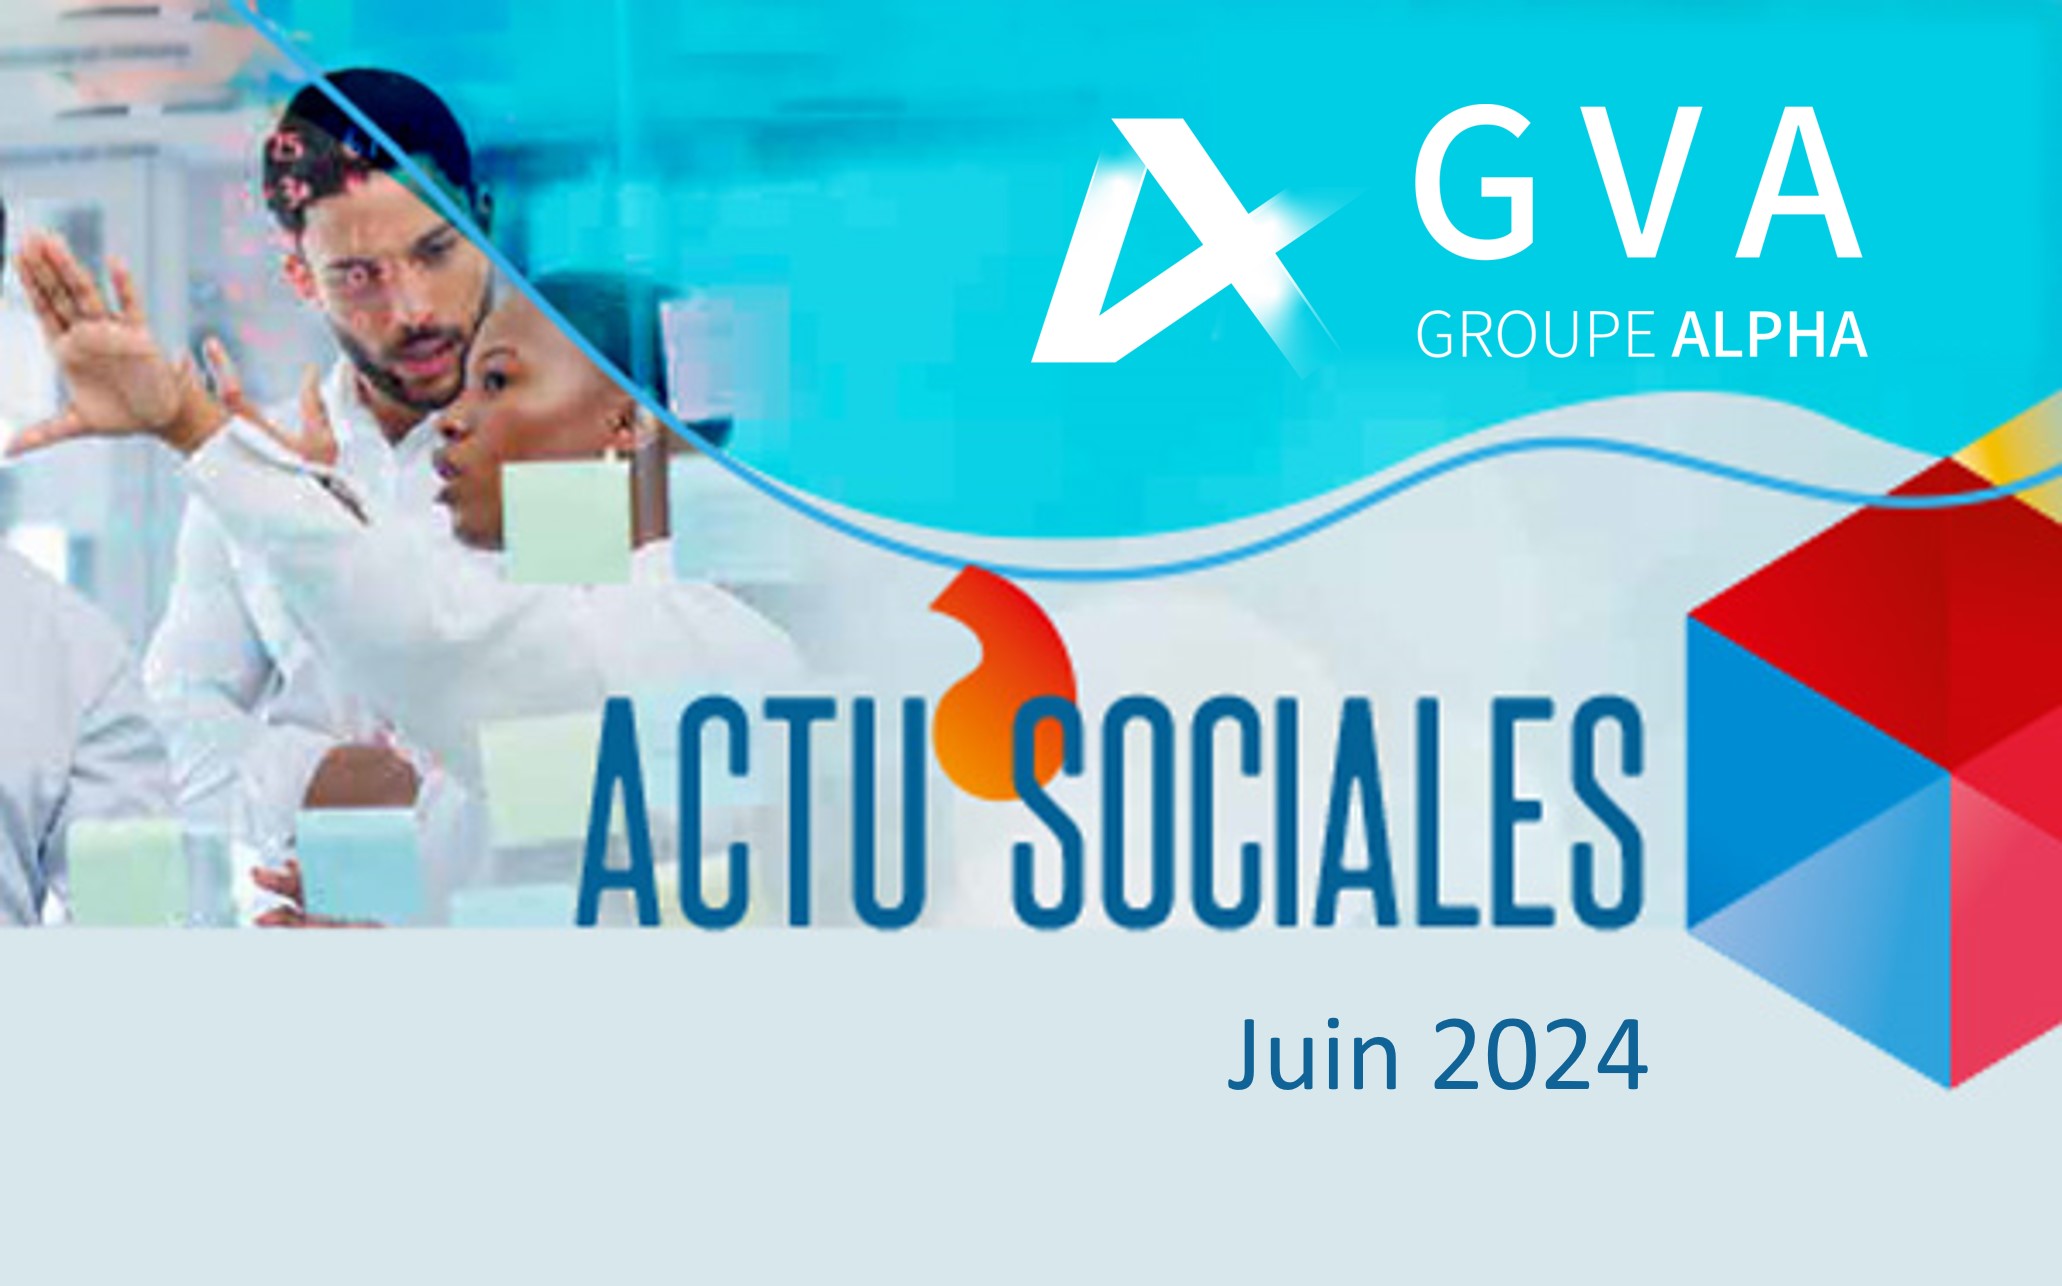 Actus sociale GVA • Groupe Alpha